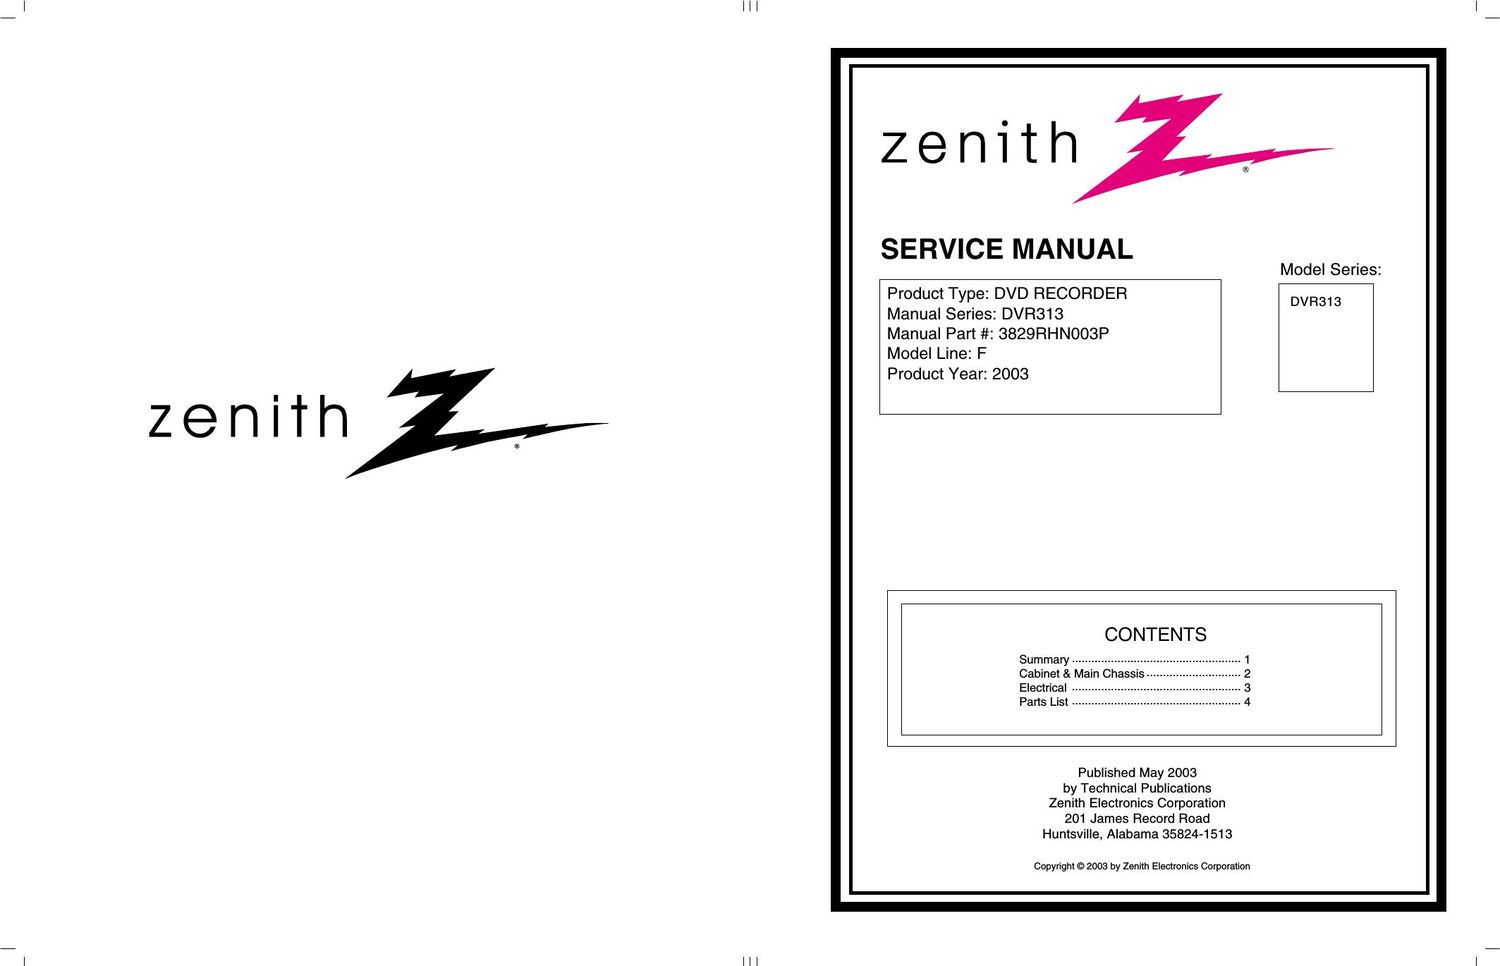 zenith dvr 313 service manual